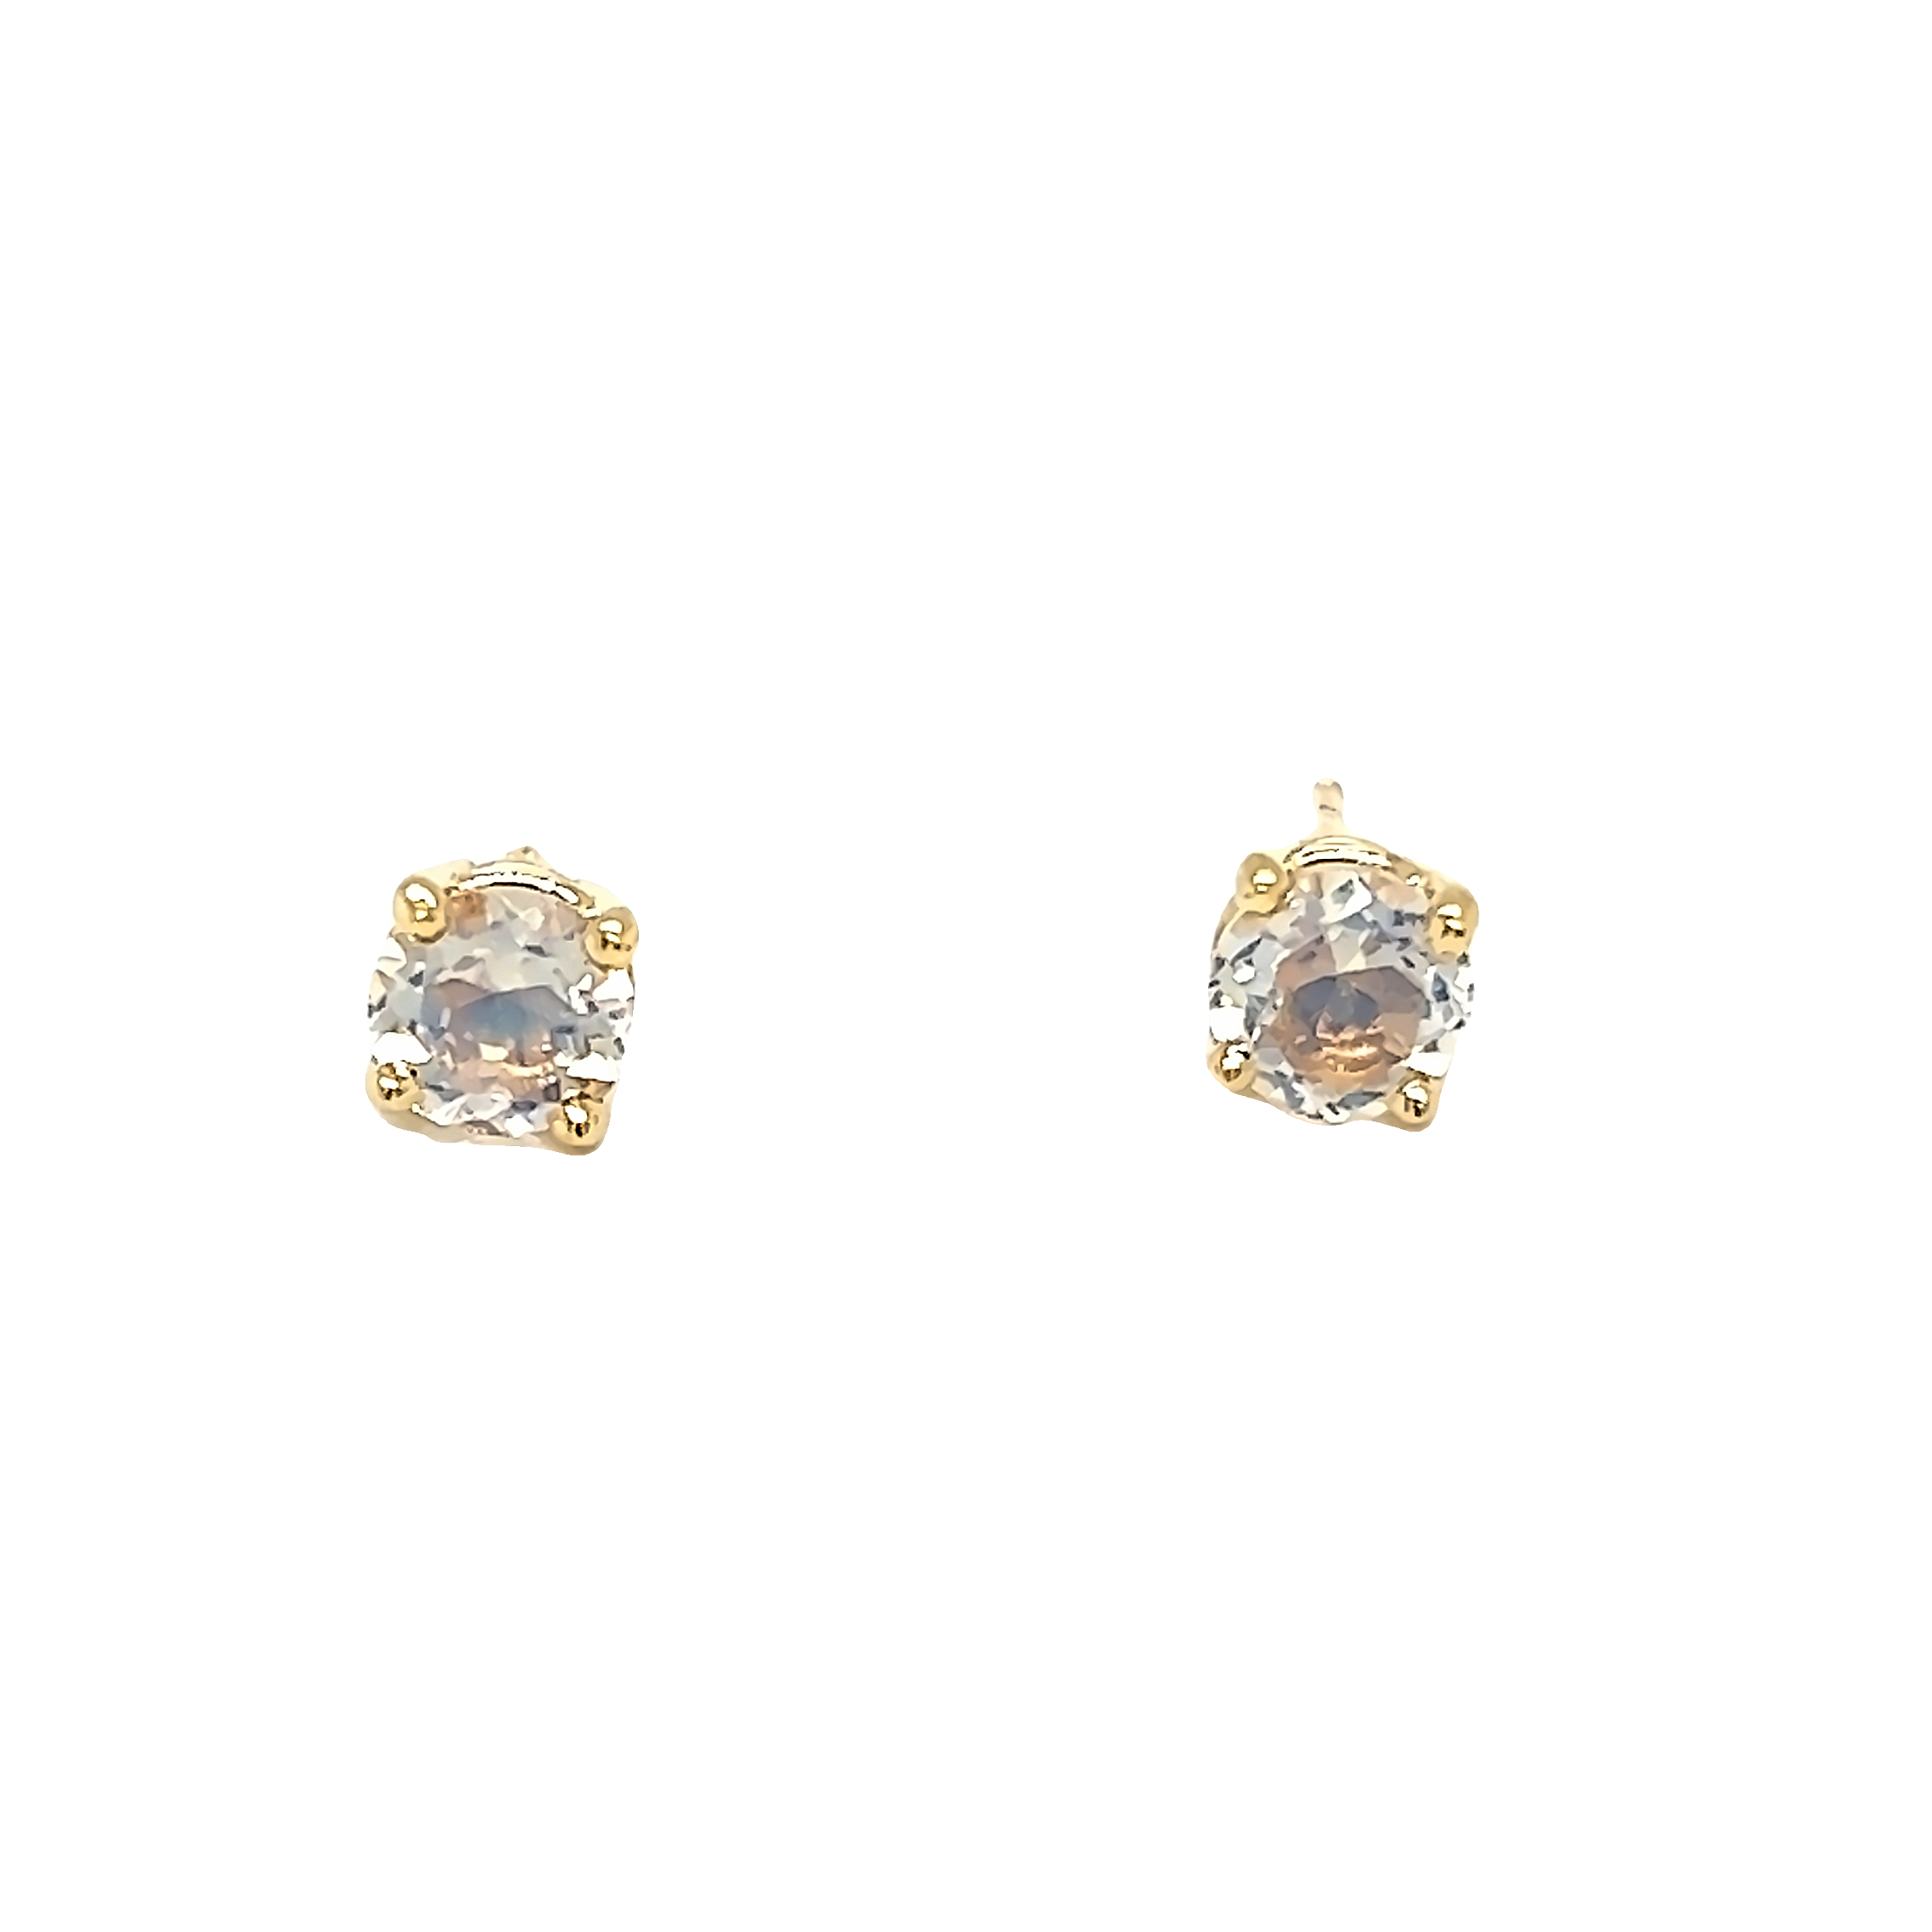 14 Karat yellow gold stud earrings with 2=5.00mm round Moonstones